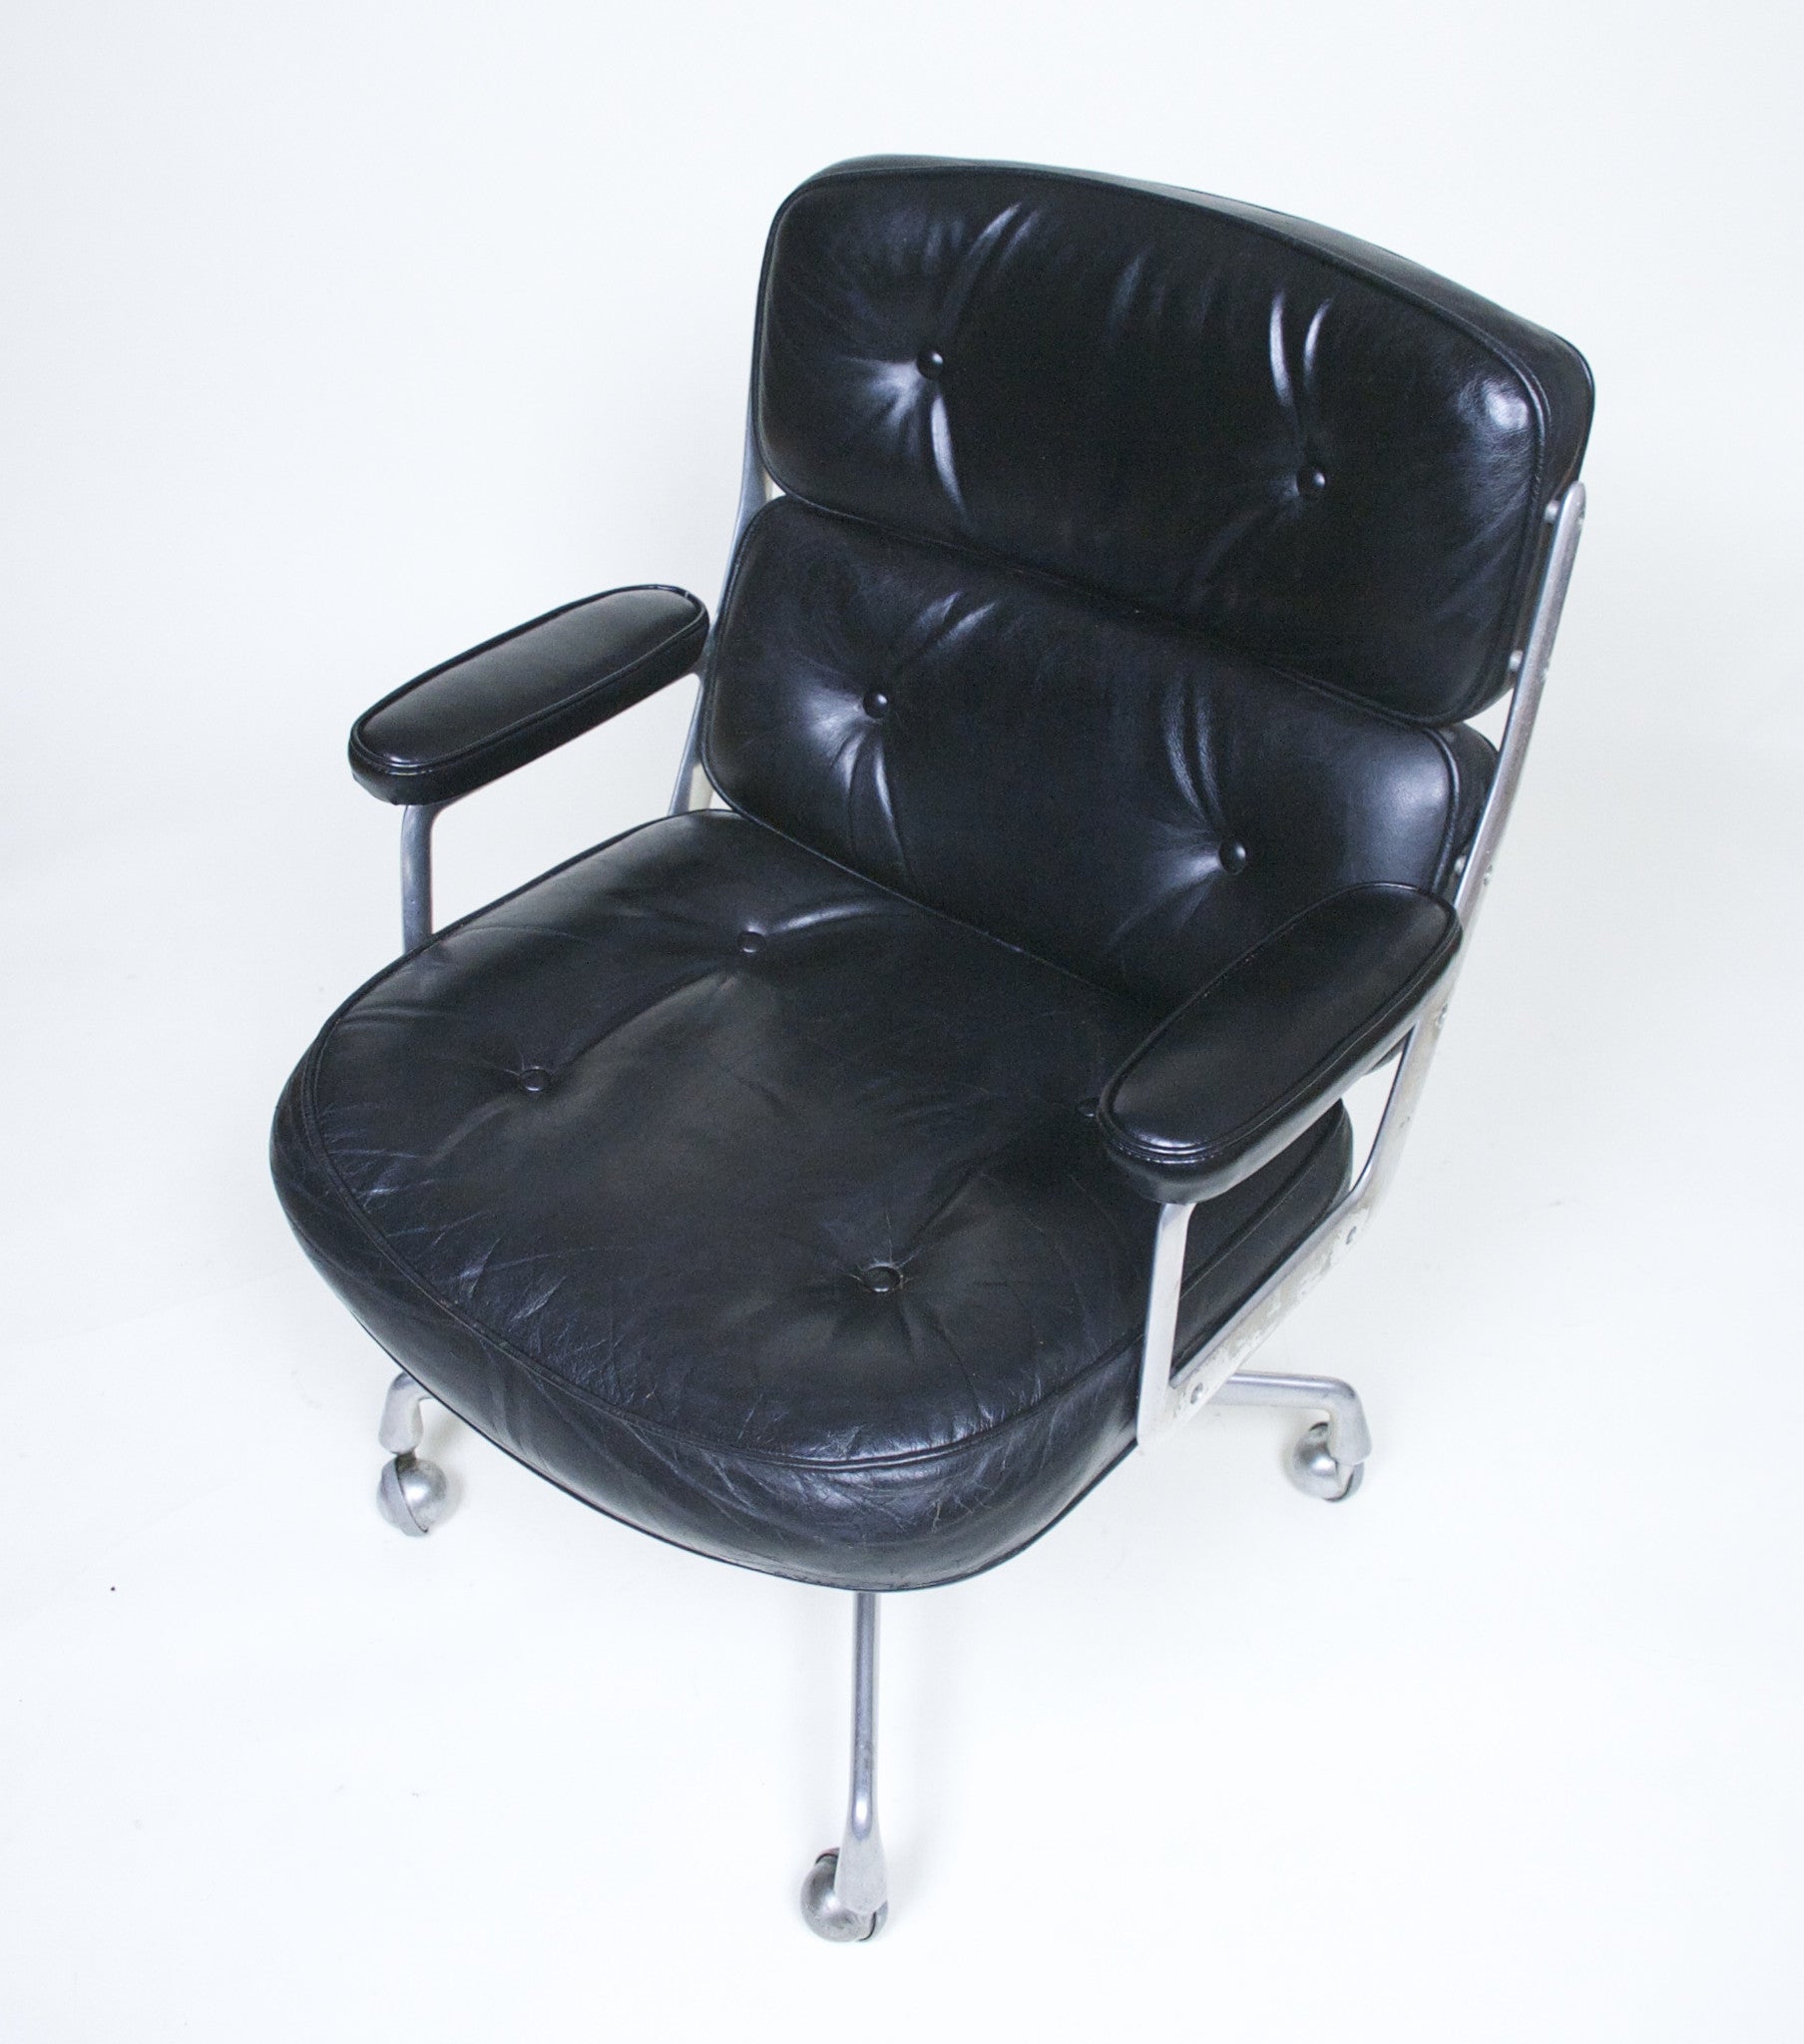 SOLD Eames Herman Miller Time Life Aluminum Group Chair Leather Vintage Original